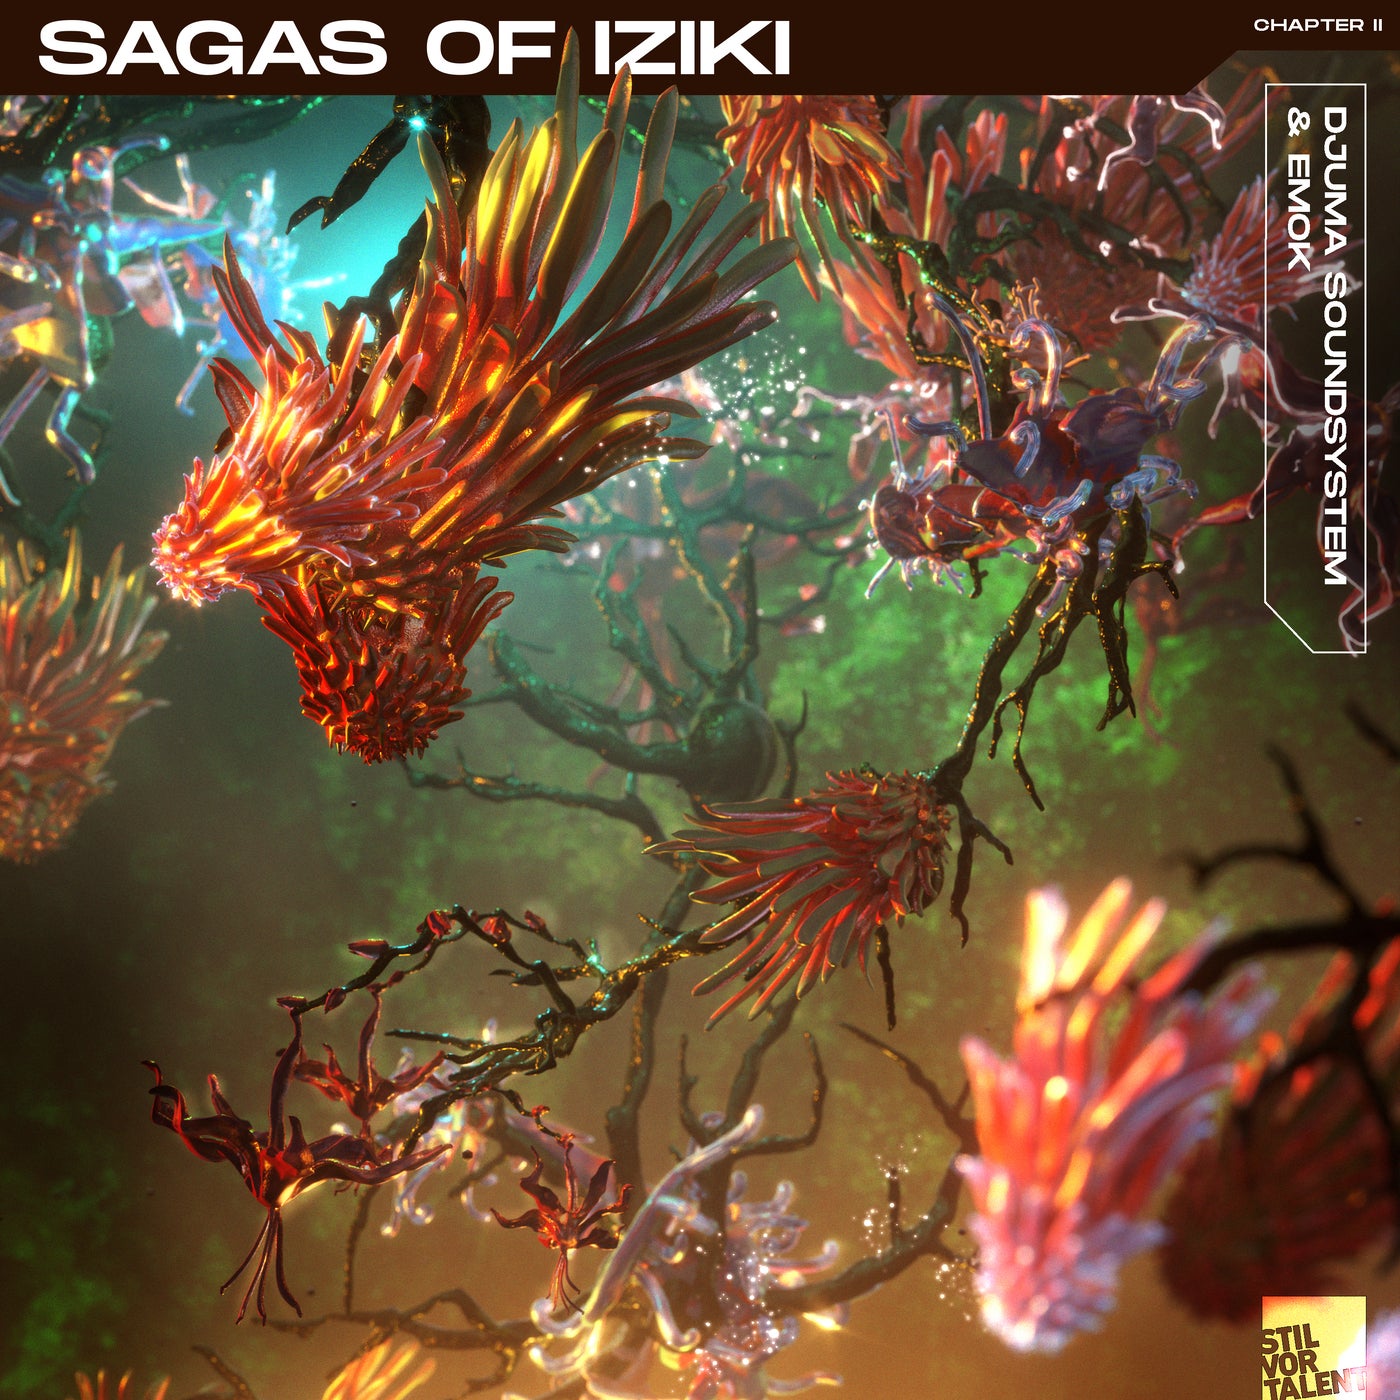 Download Sagas Of Iziki | Chapter 2 on Electrobuzz